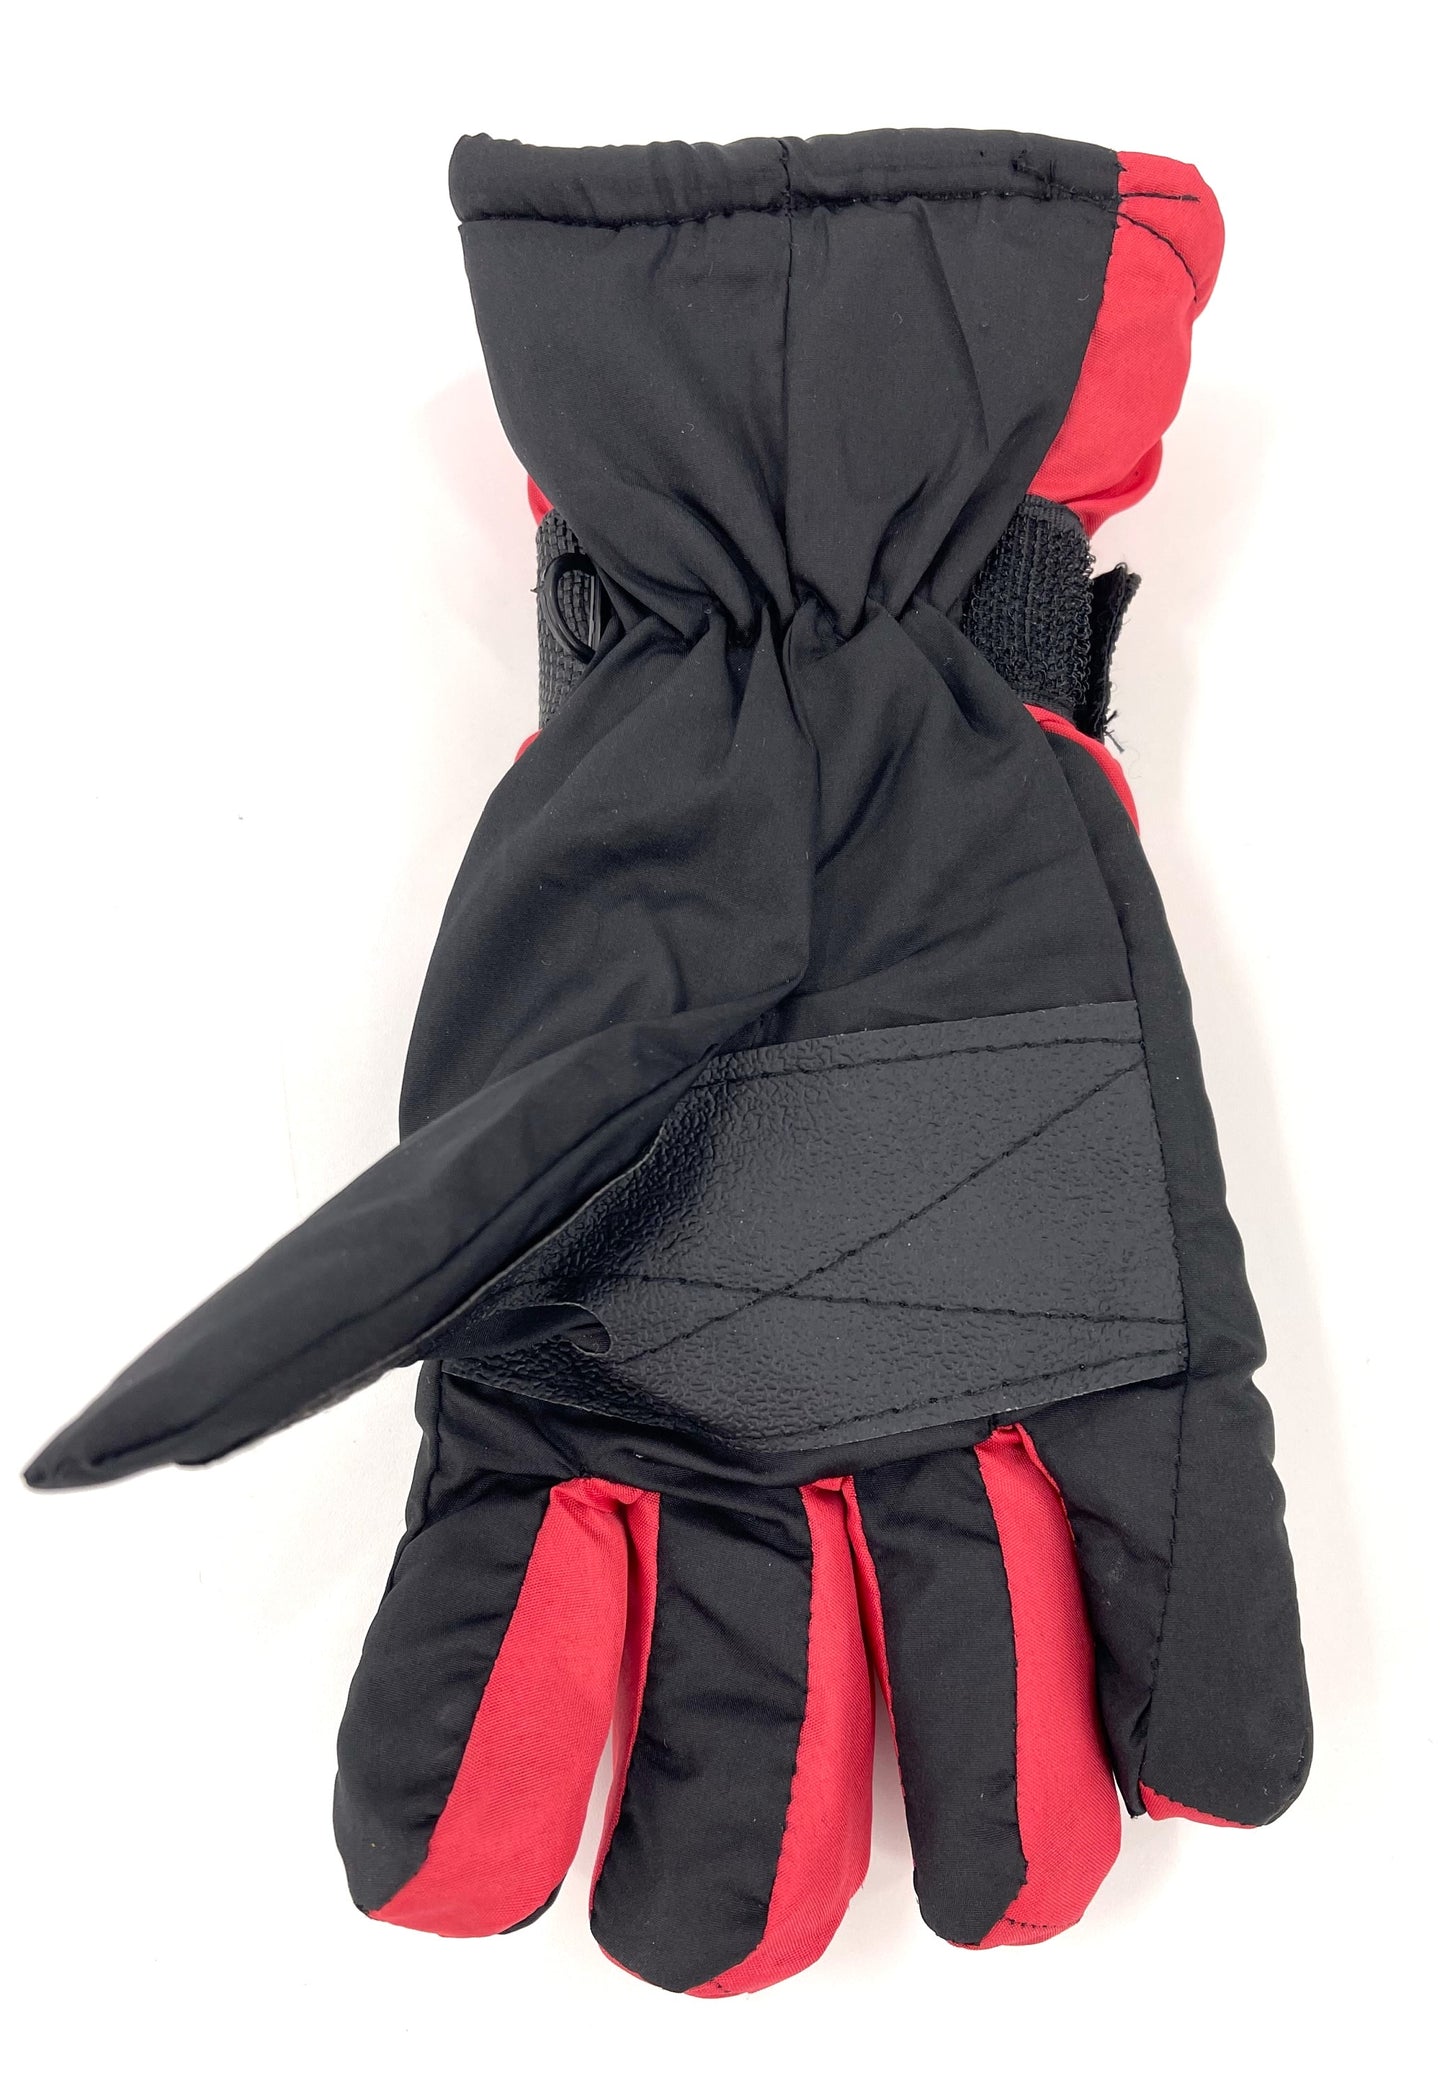 Boys Ski Snowboarding Winter Gloves - Palm/Thumb Grips & Adjustable Wrist Strap